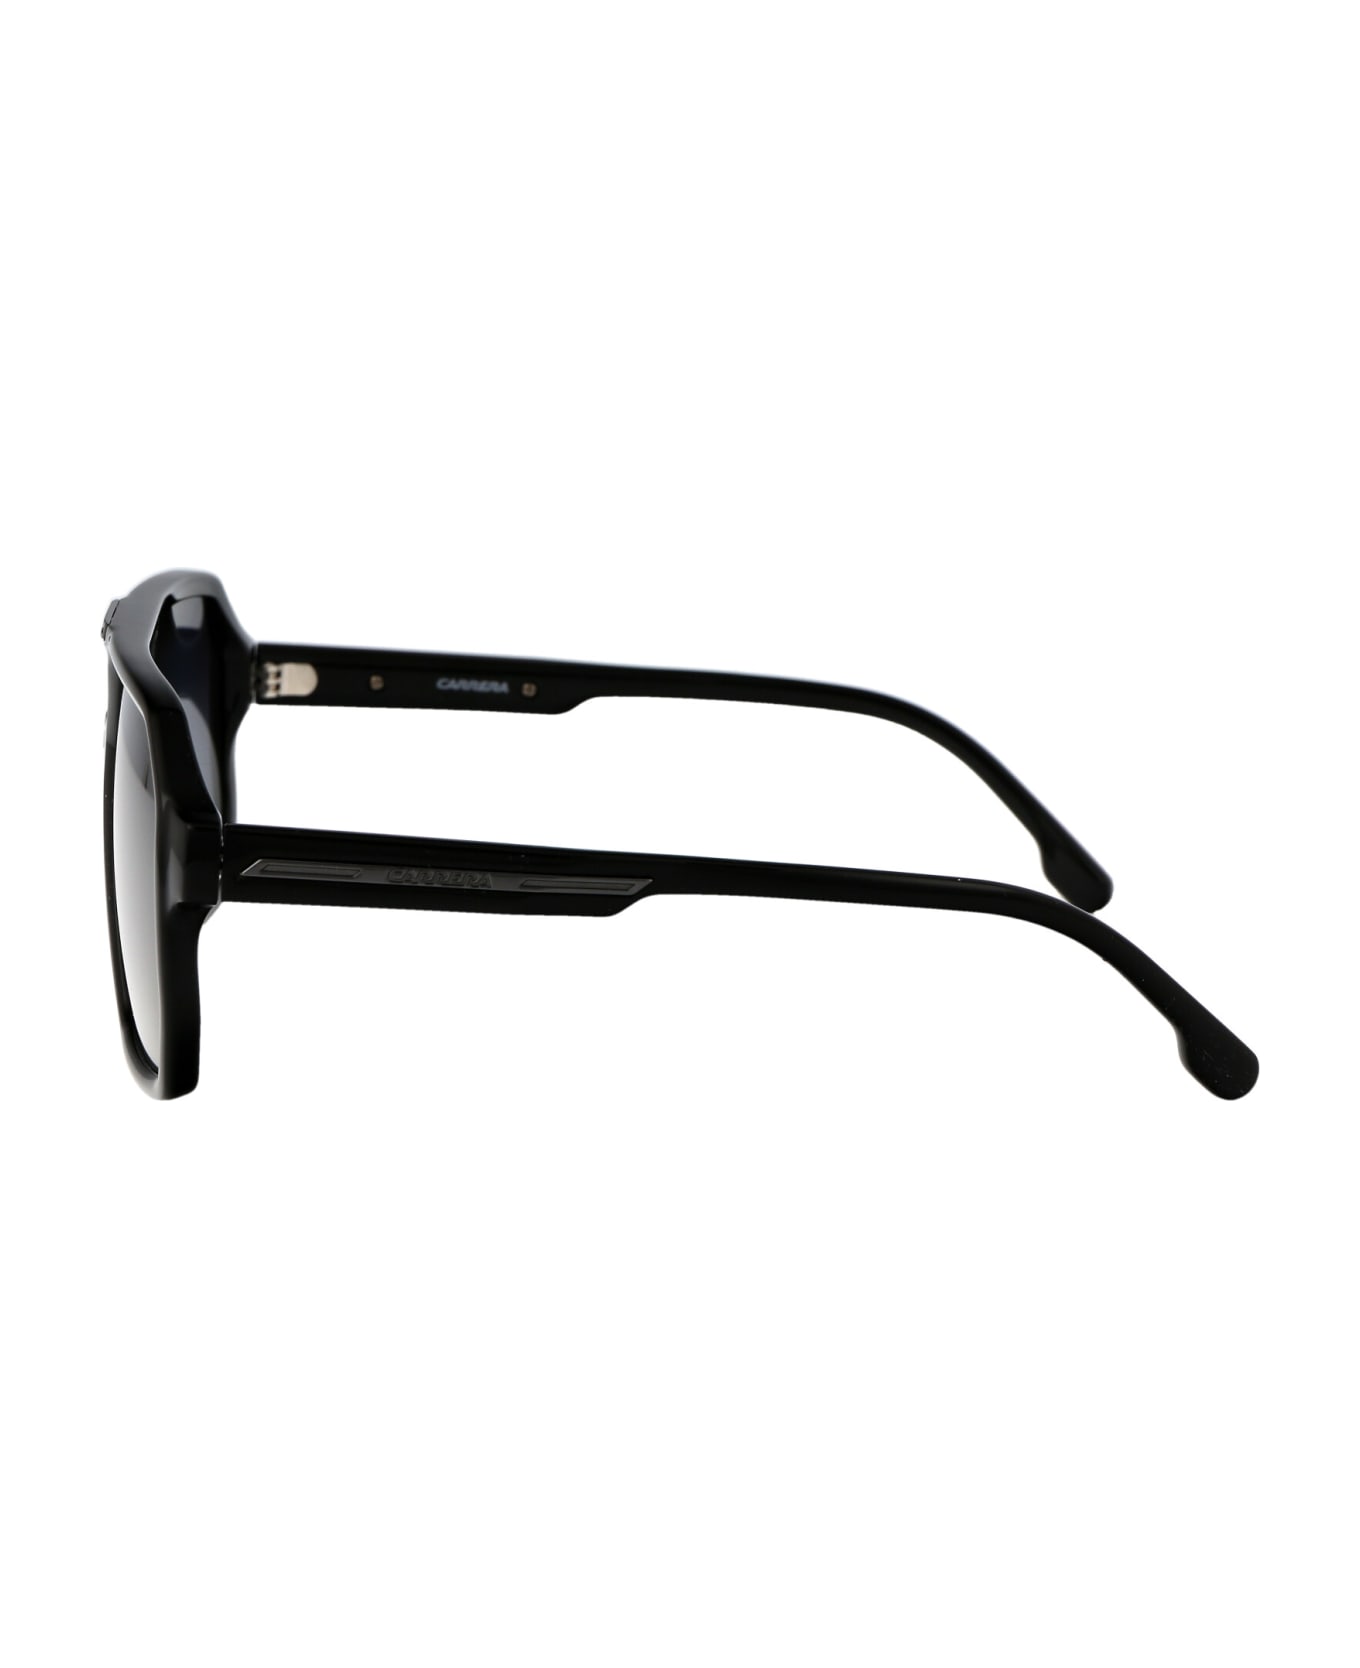 Carrera Victory C 01/s Sunglasses - 807WJ BLACK サングラス